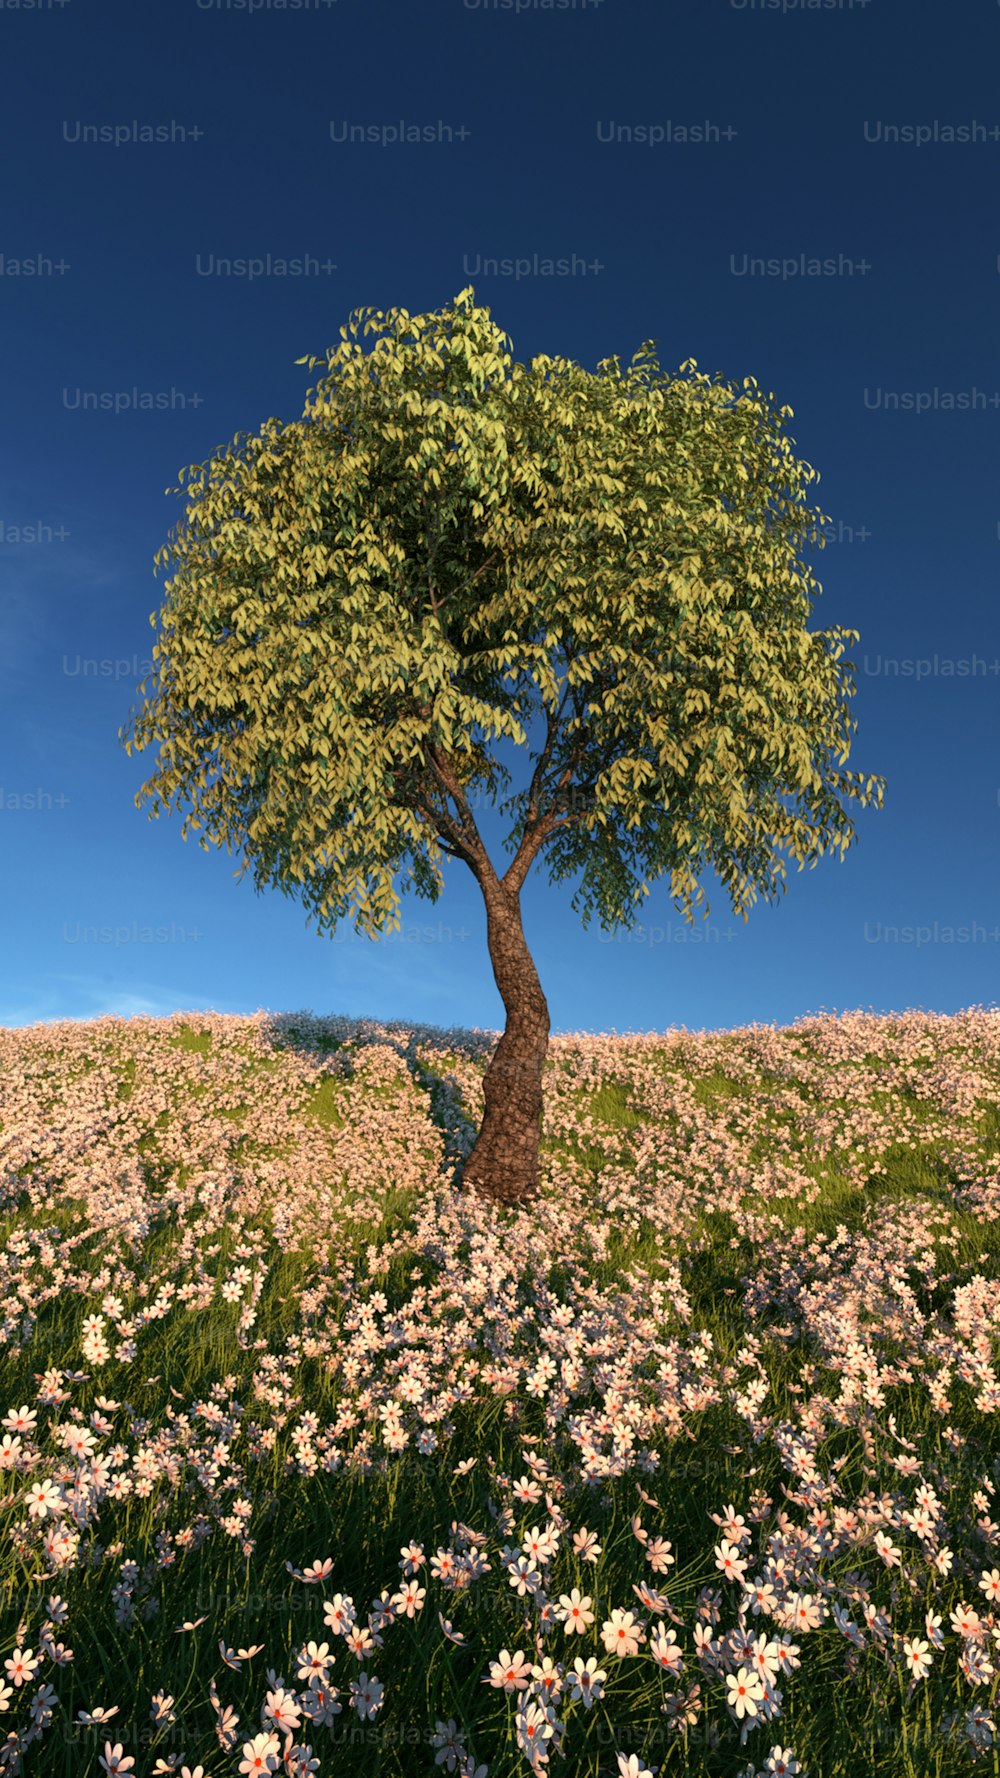 a tree in a field of flowers under a blue sky